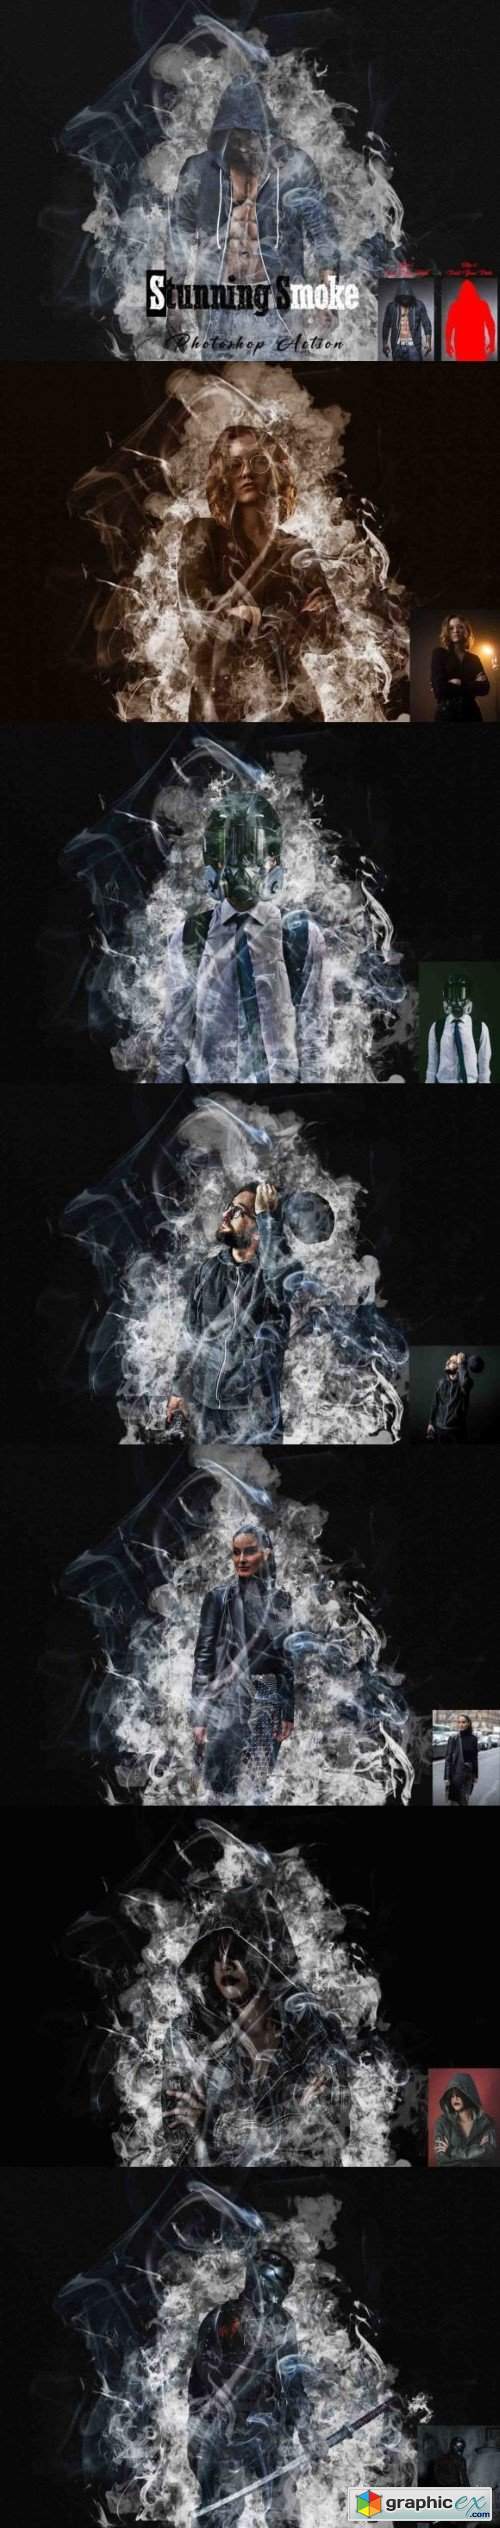 Stunning Smoke Photoshop Action